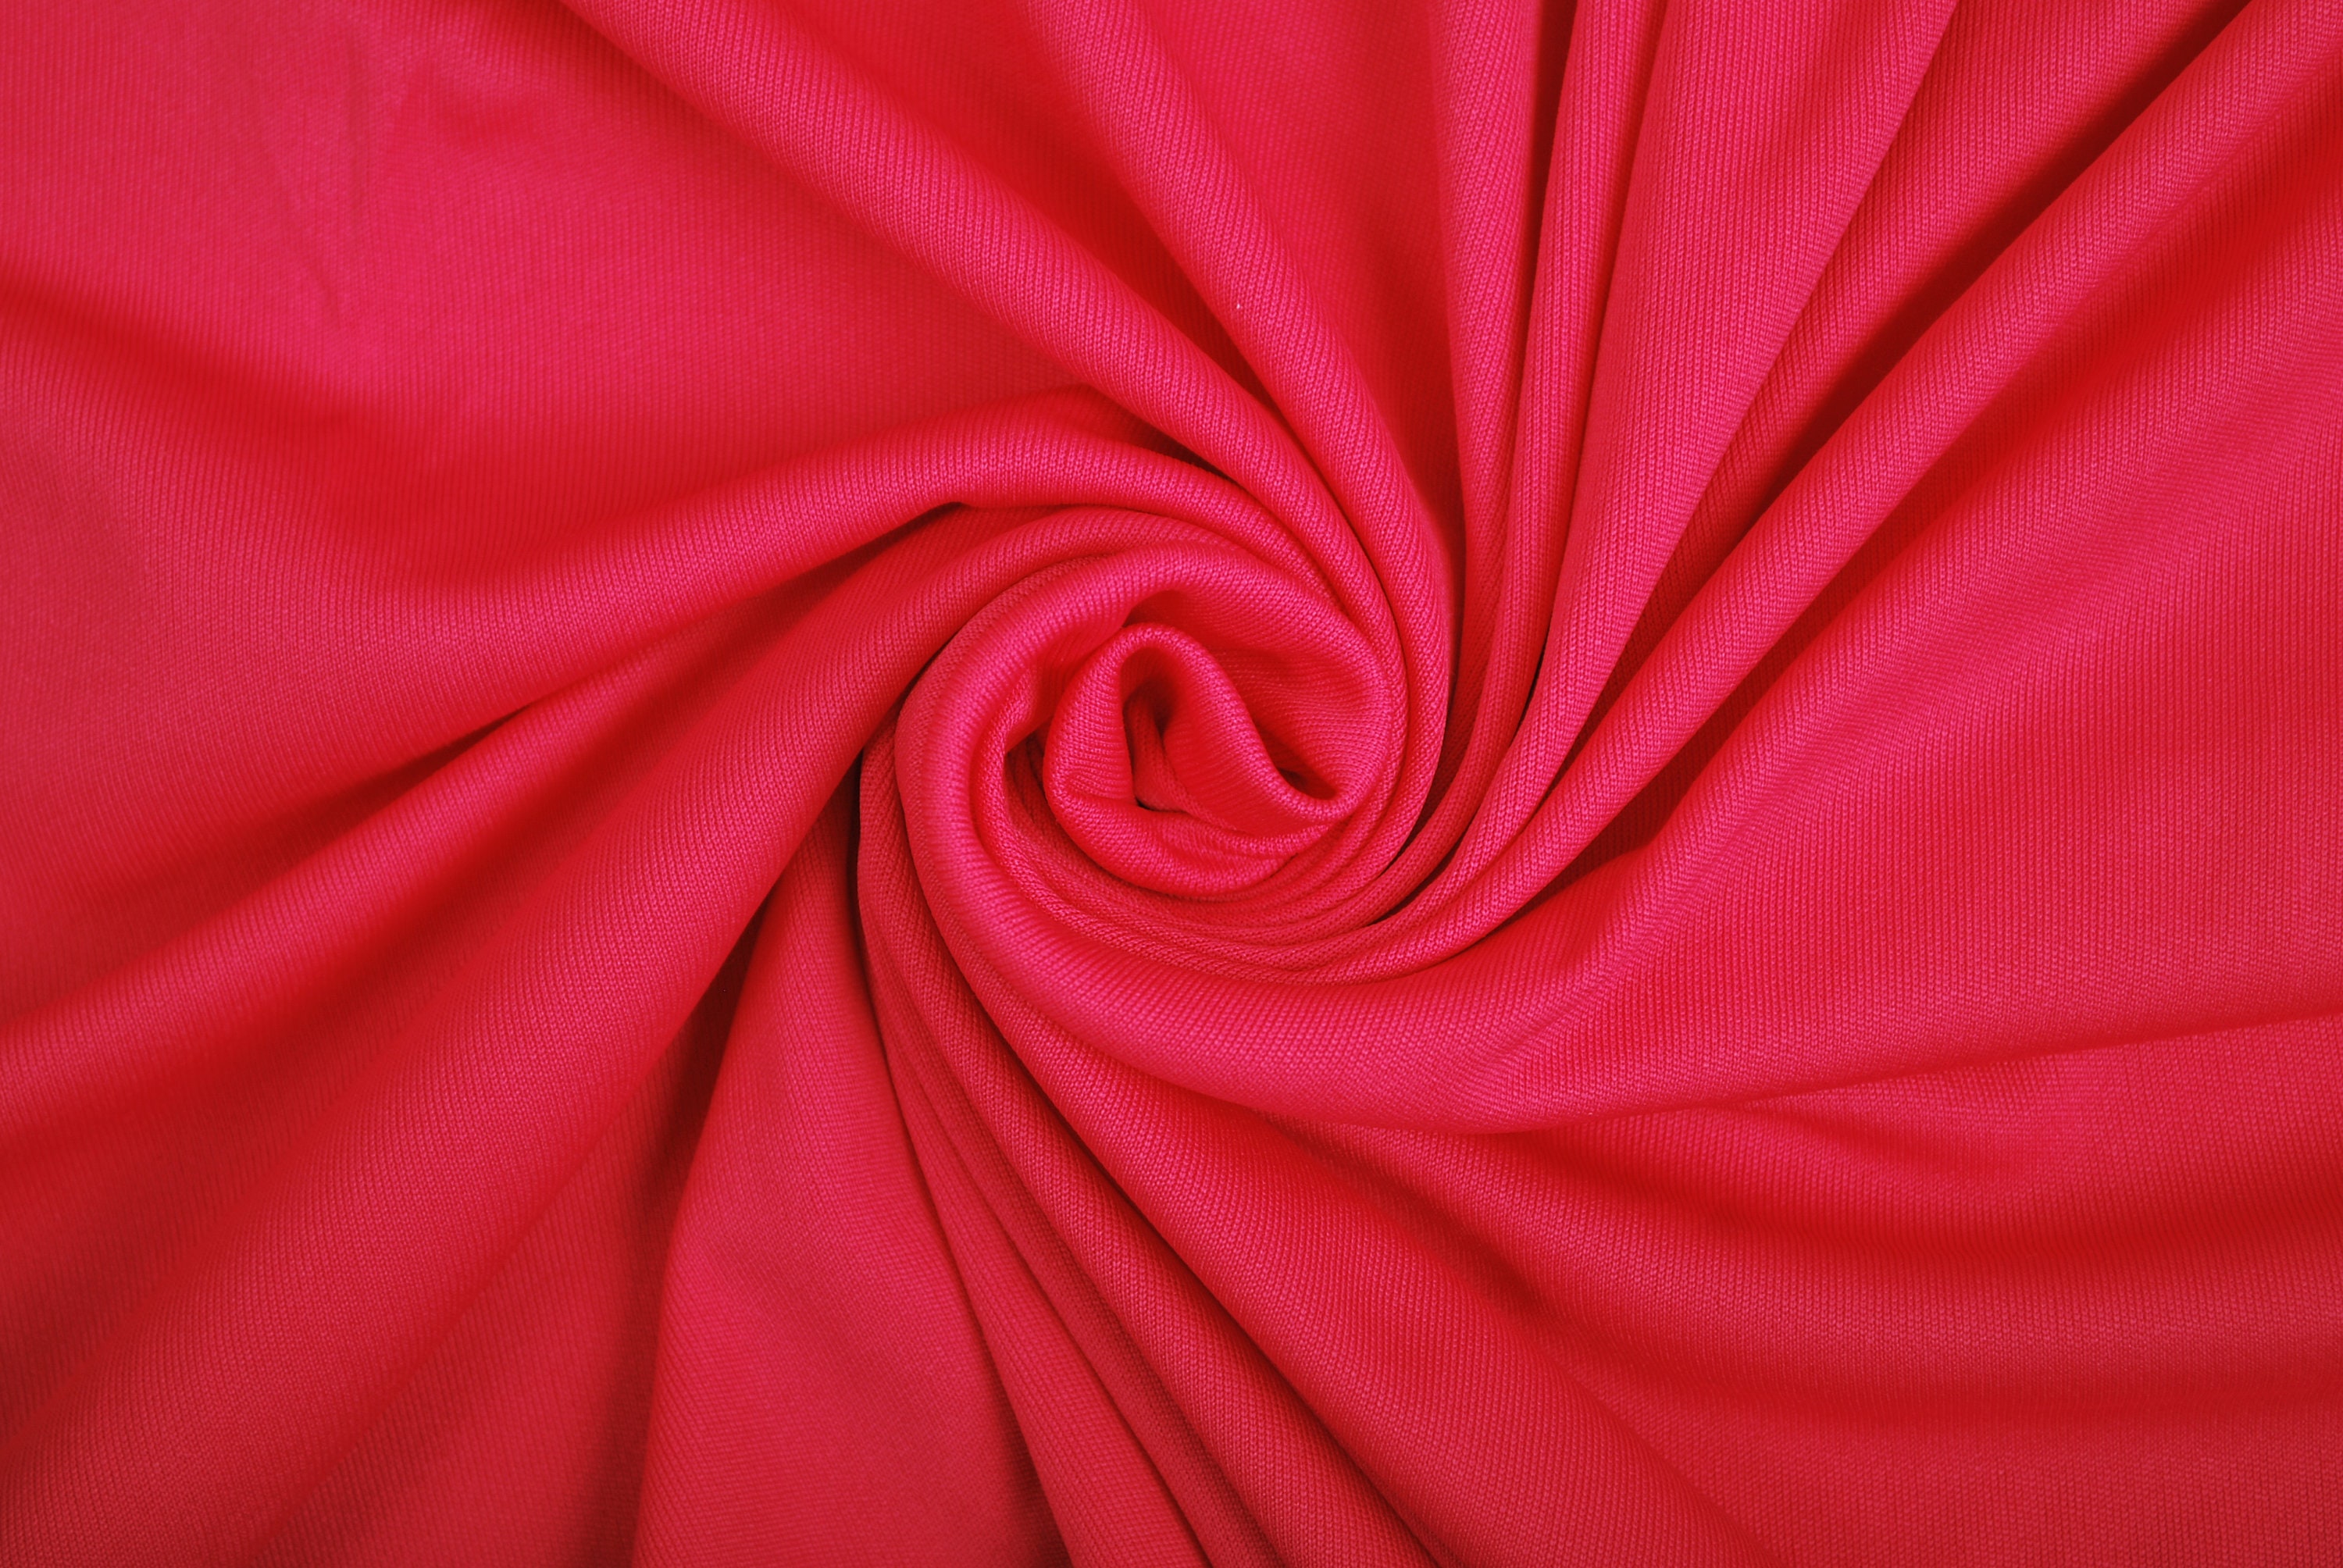 100% Rayon Elastane Fabric Pink Fabric Smooth Fabric Soft Fabric